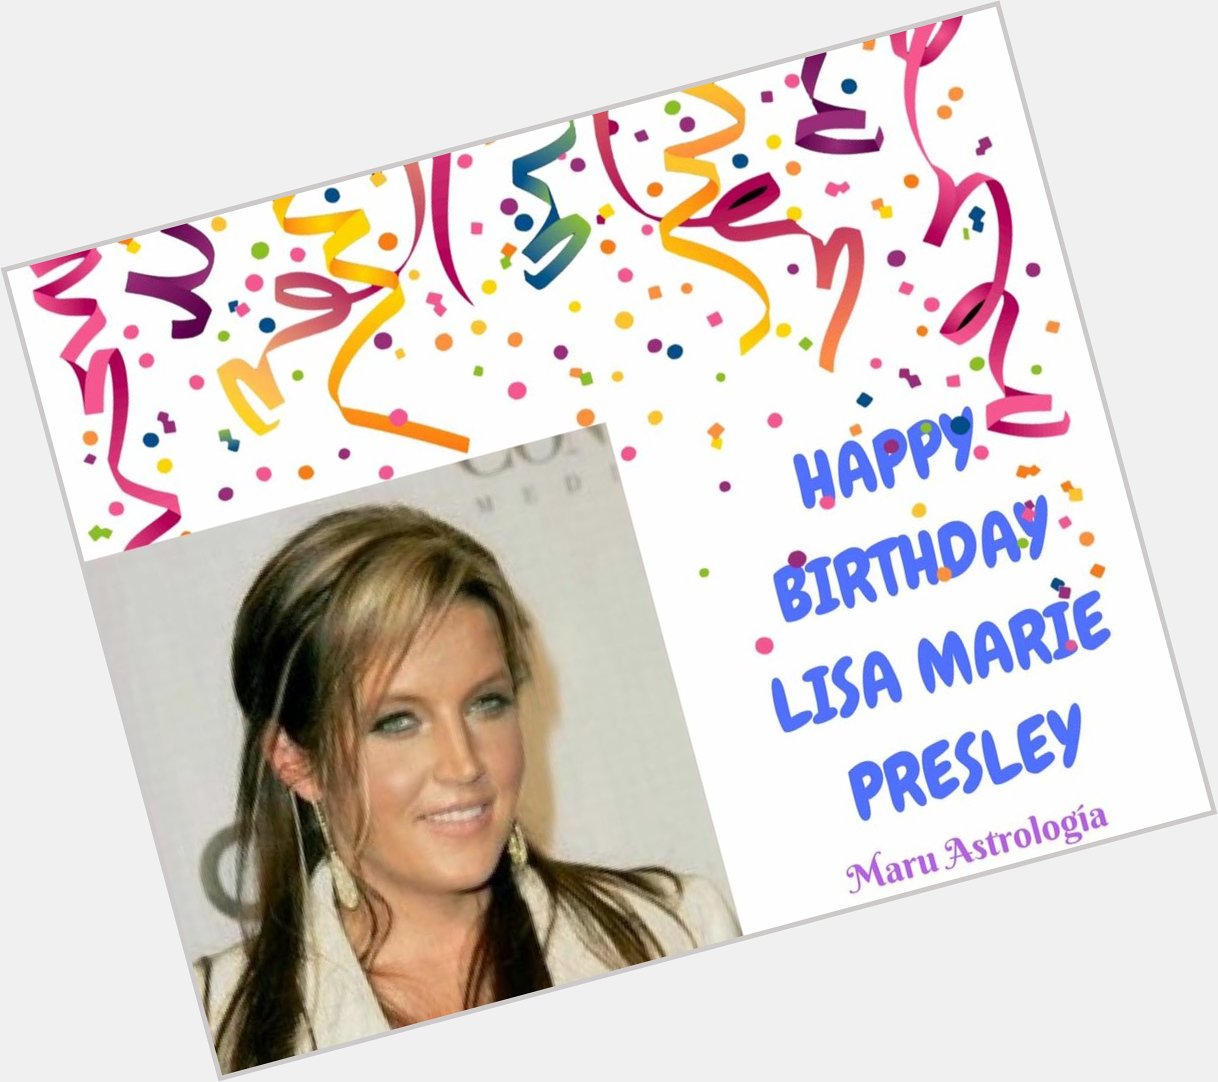 HAPPY BIRTHDAY LISA MARIE PRESLEY!!!!   